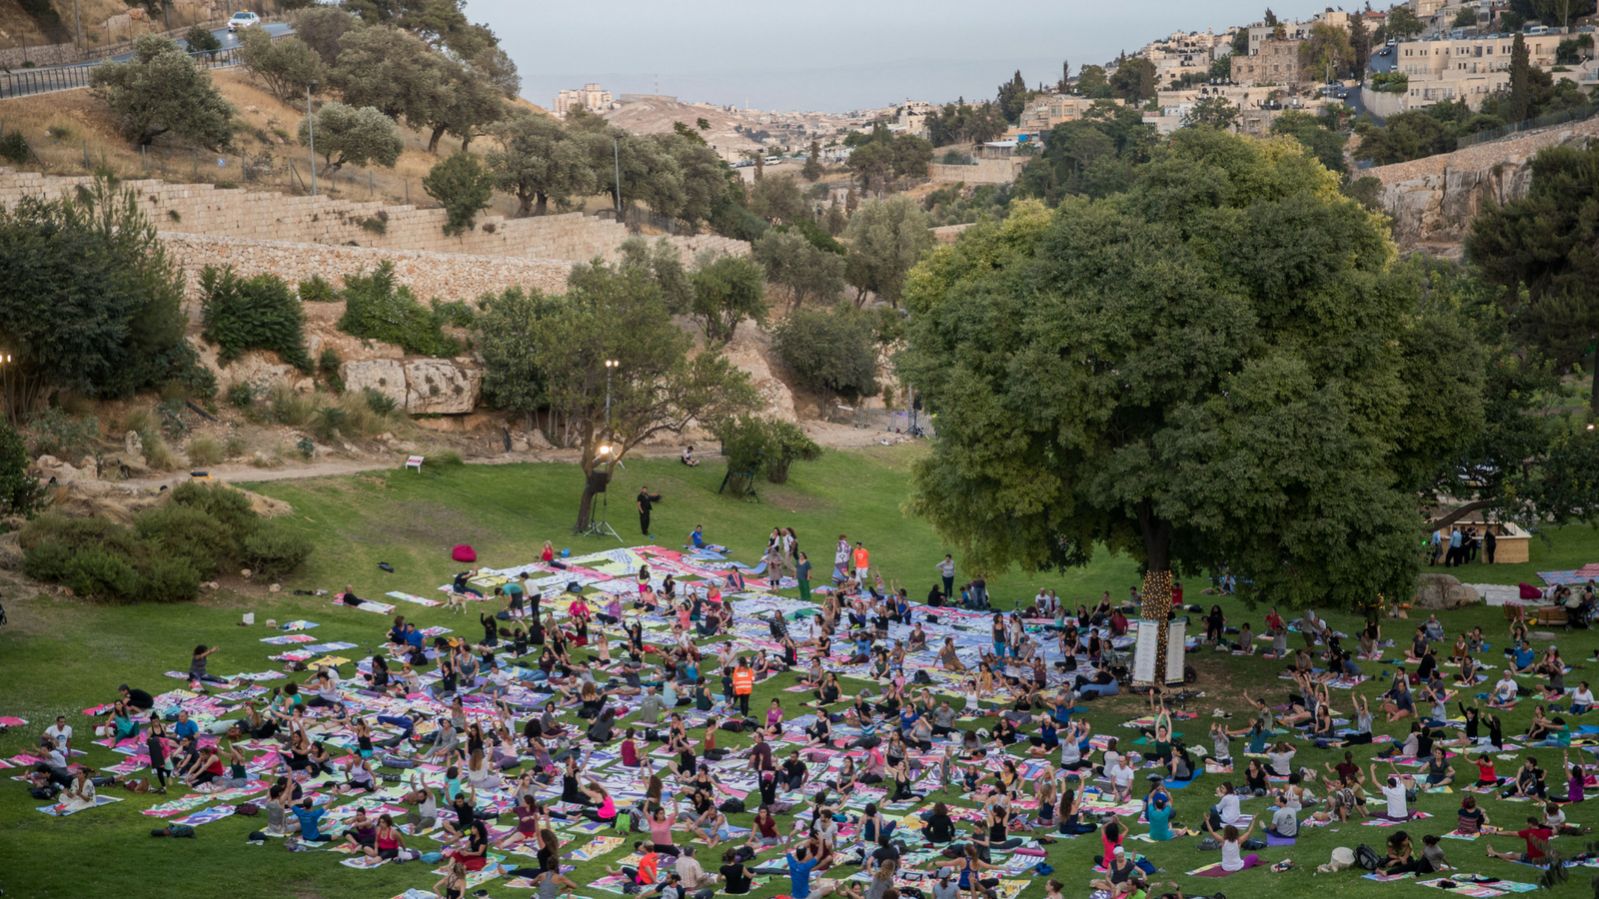 701 yoga mats paint a 'dream' picture of Jerusalem - ISRAEL21c